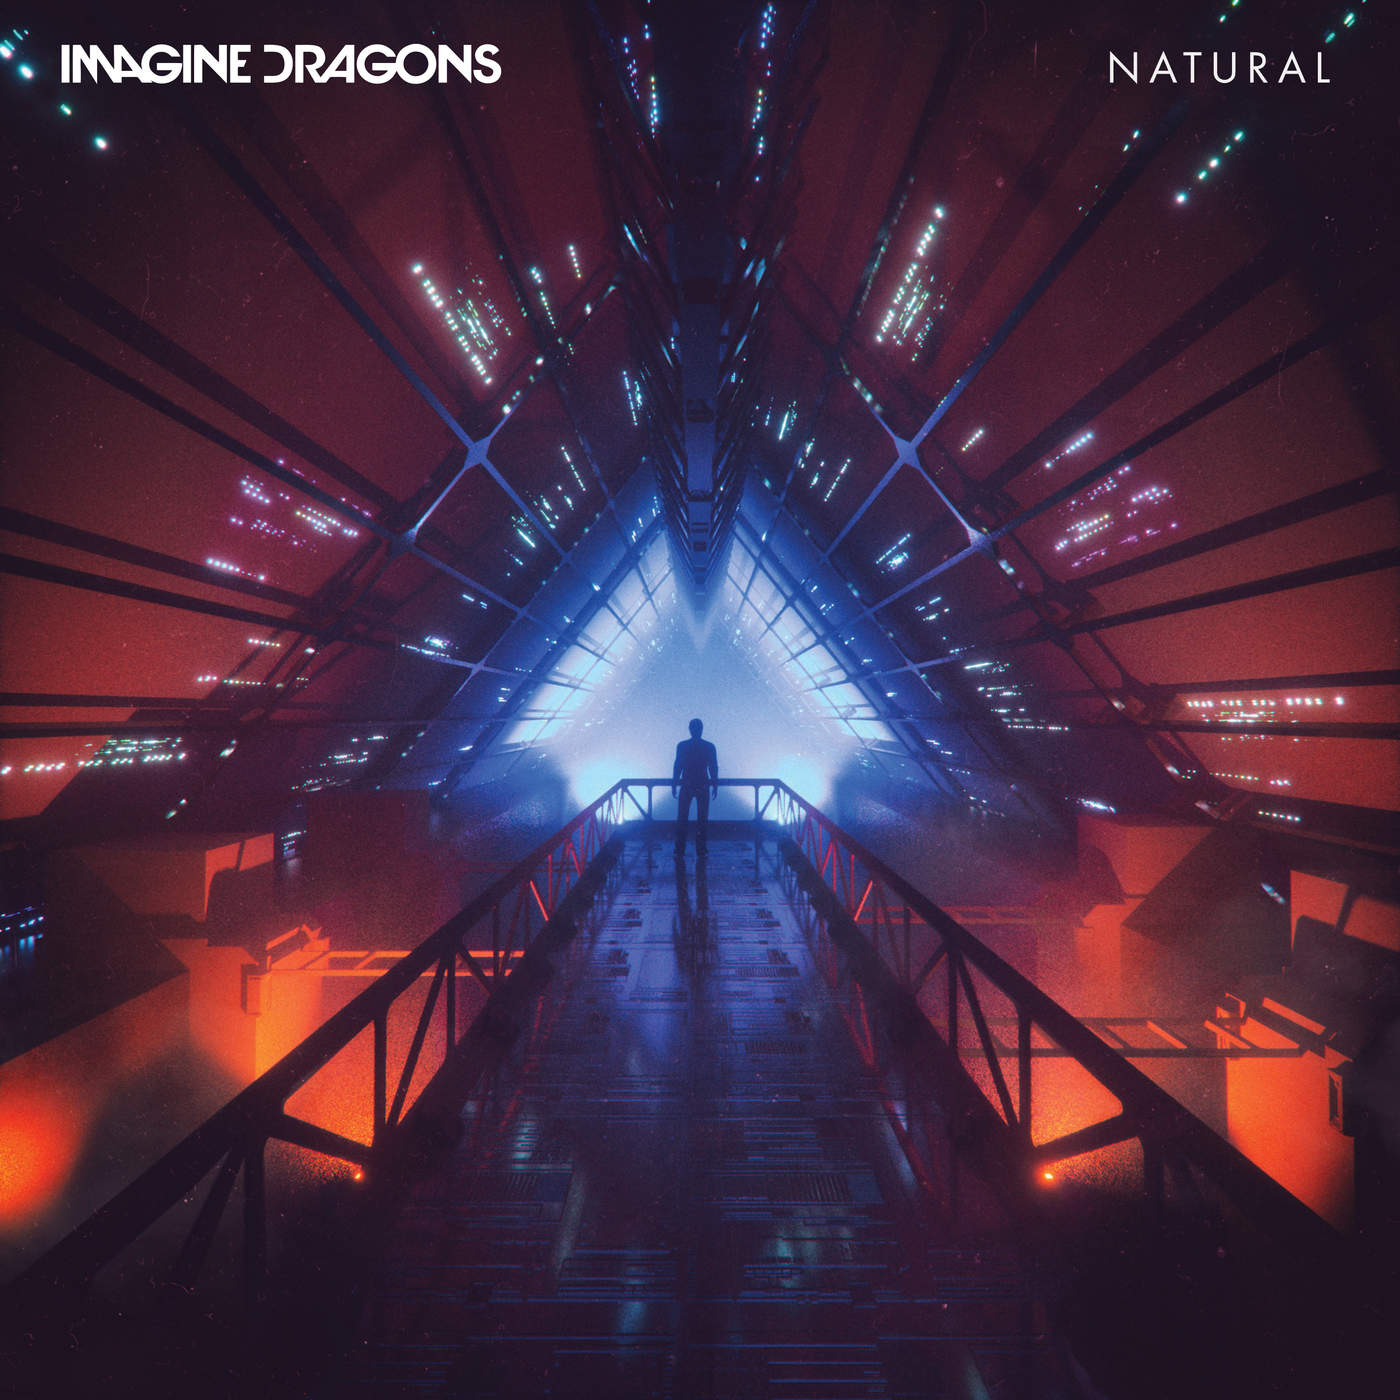 Imagine Dragons -Natural - [FLAC] - Single - 2018